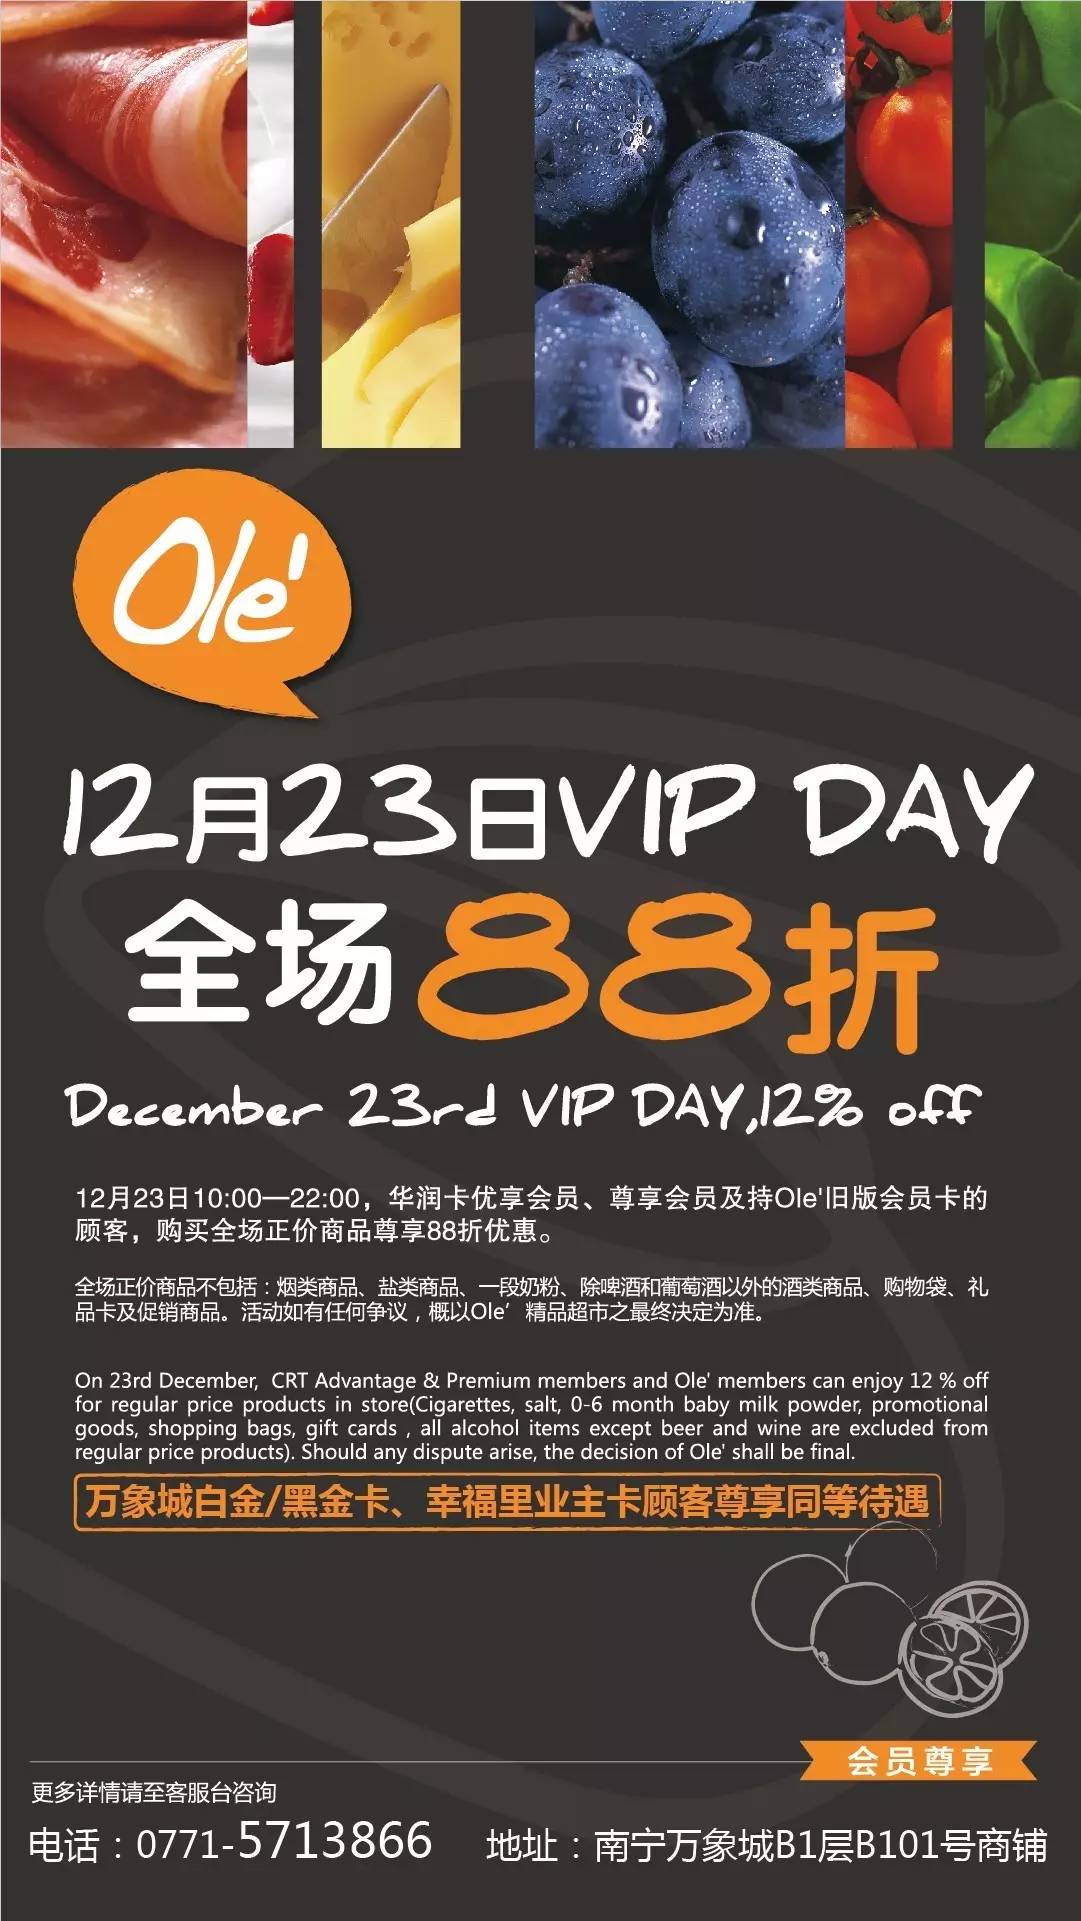 【ole"精品超市】 vip day12.23会员专享,全场88折,劲爆特惠!